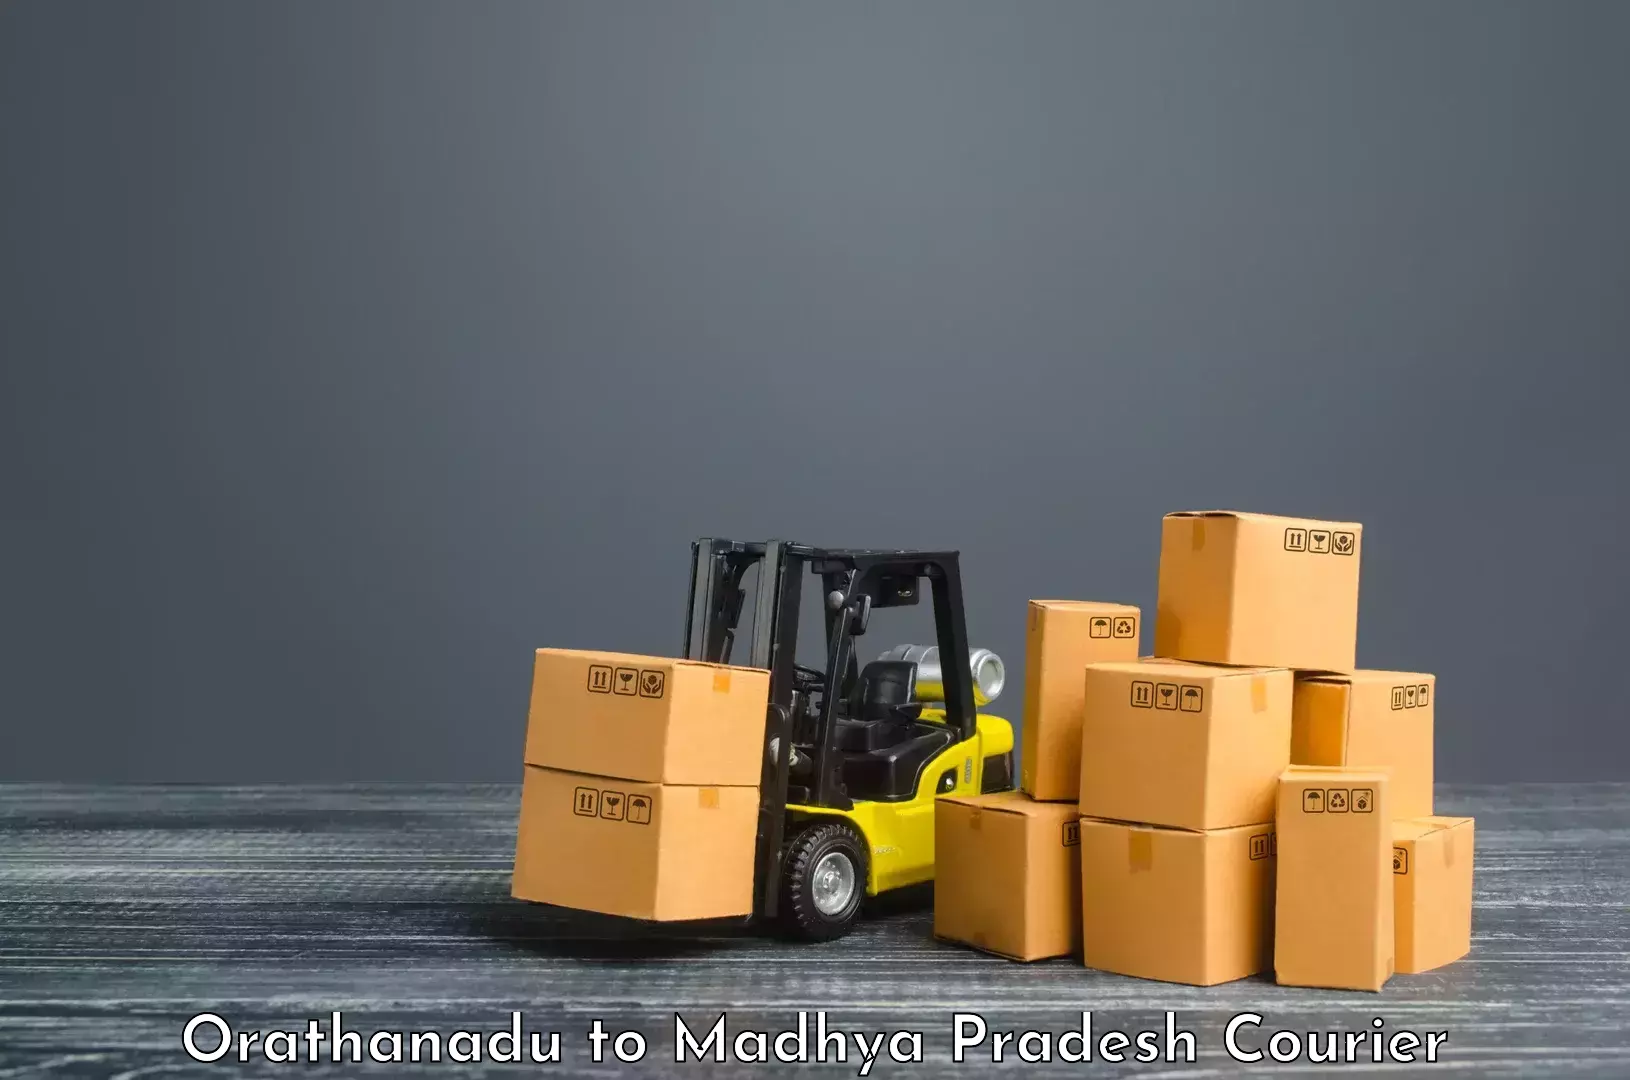 Reliable parcel services in Orathanadu to Mandsaur